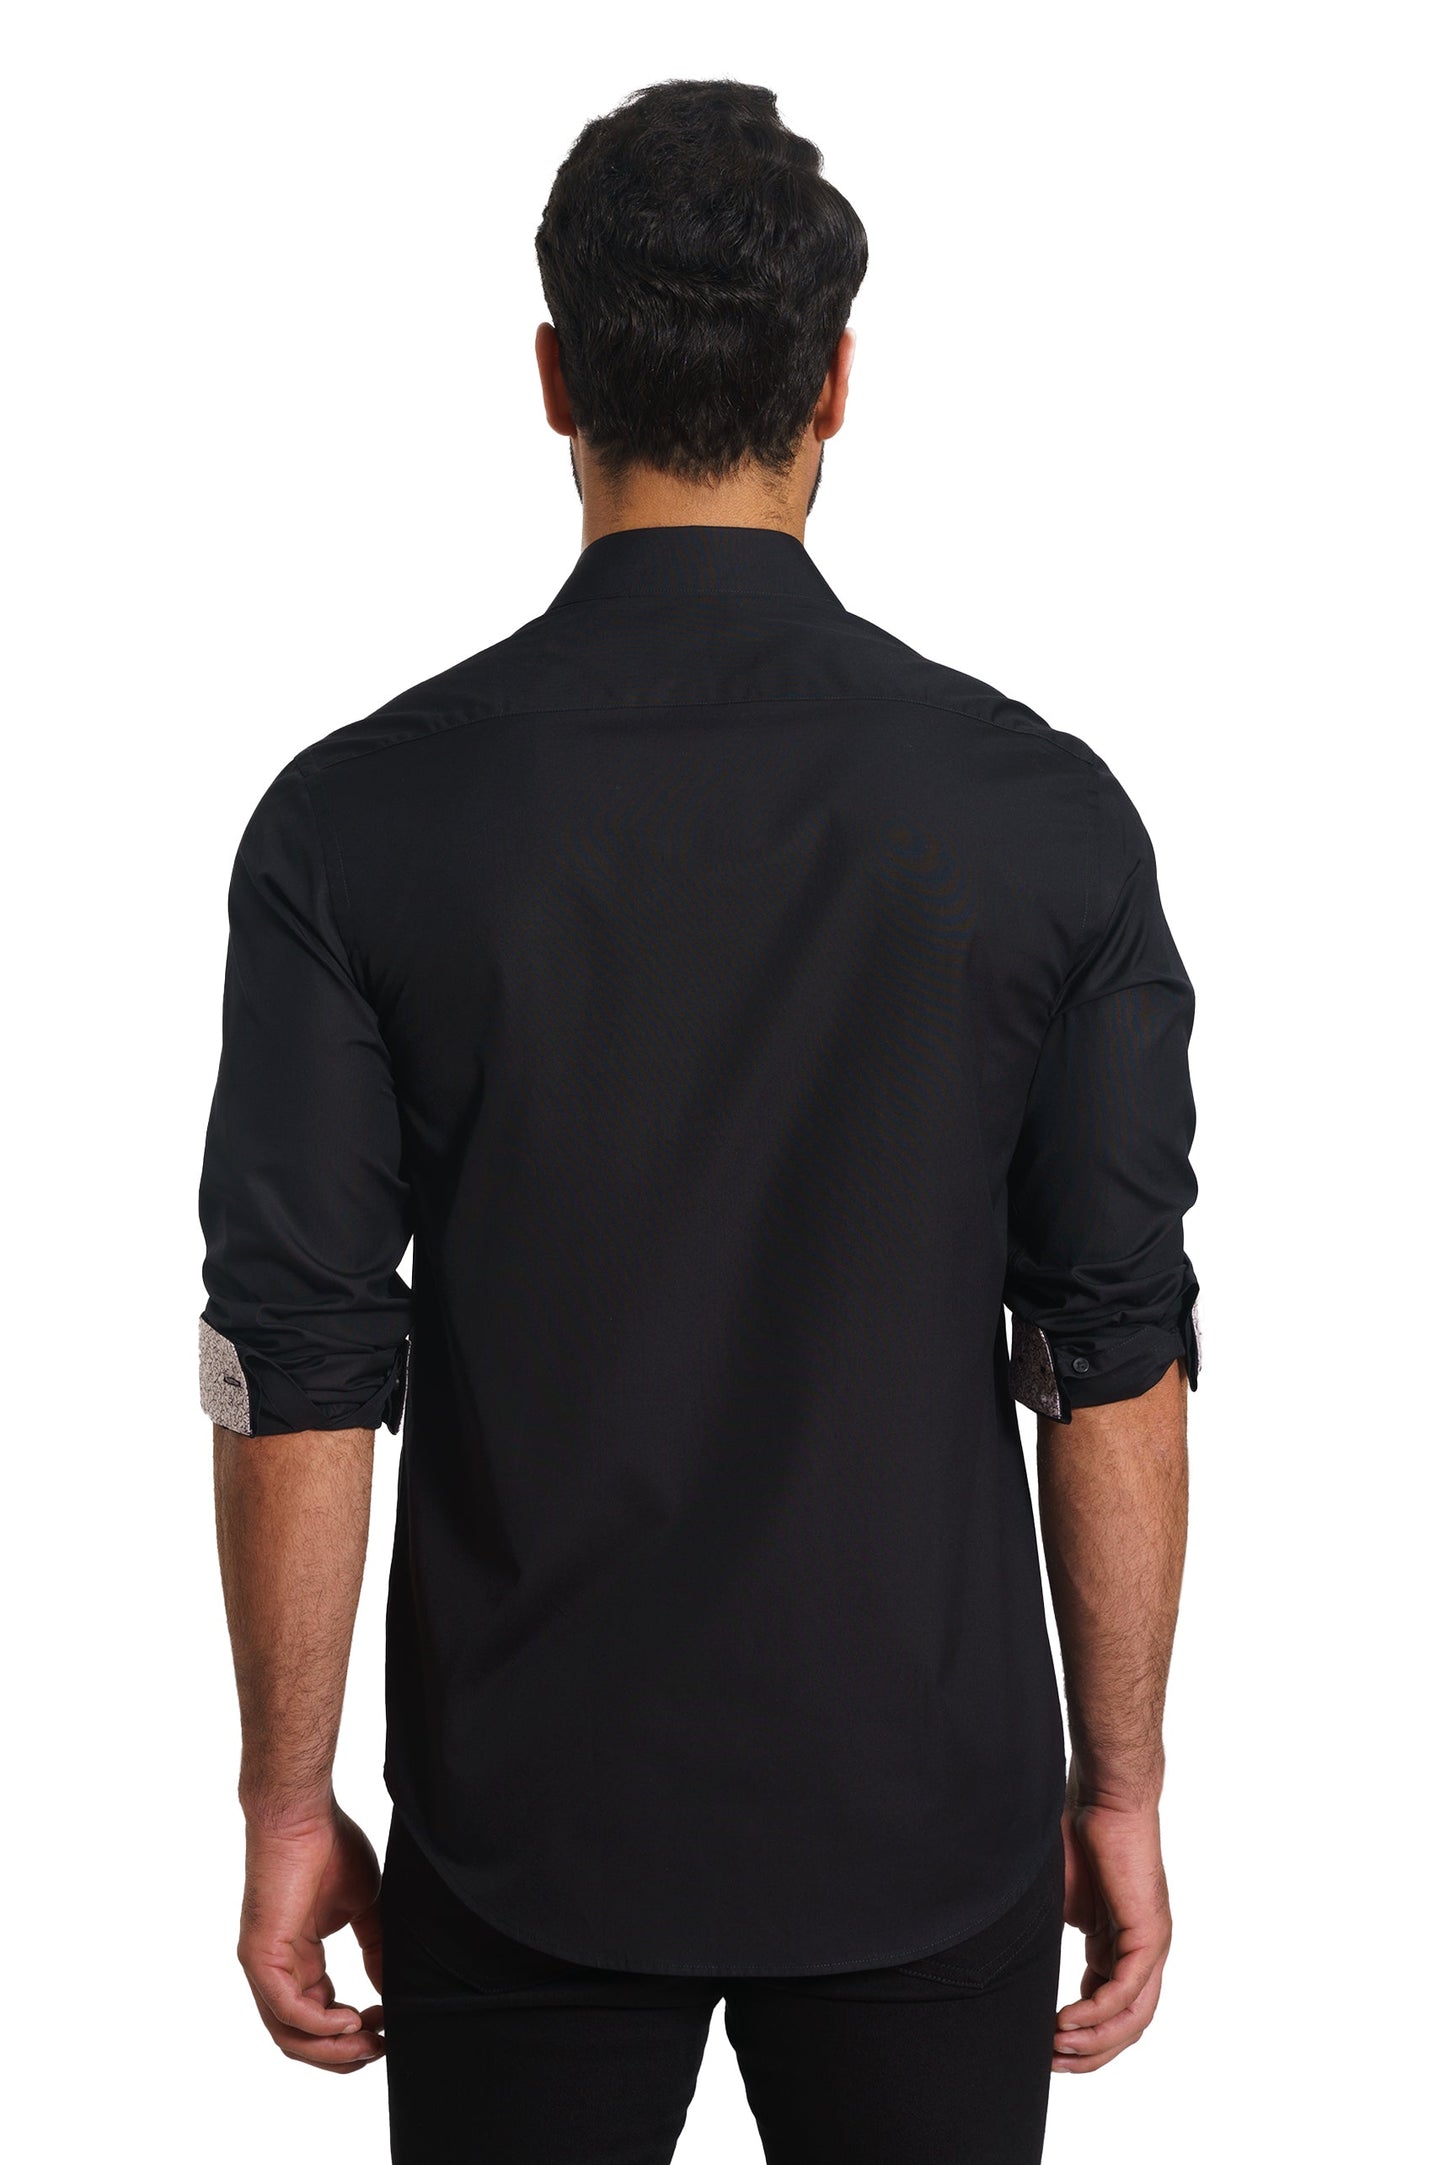 Black Long Sleeve Shirt TP-7154 Back